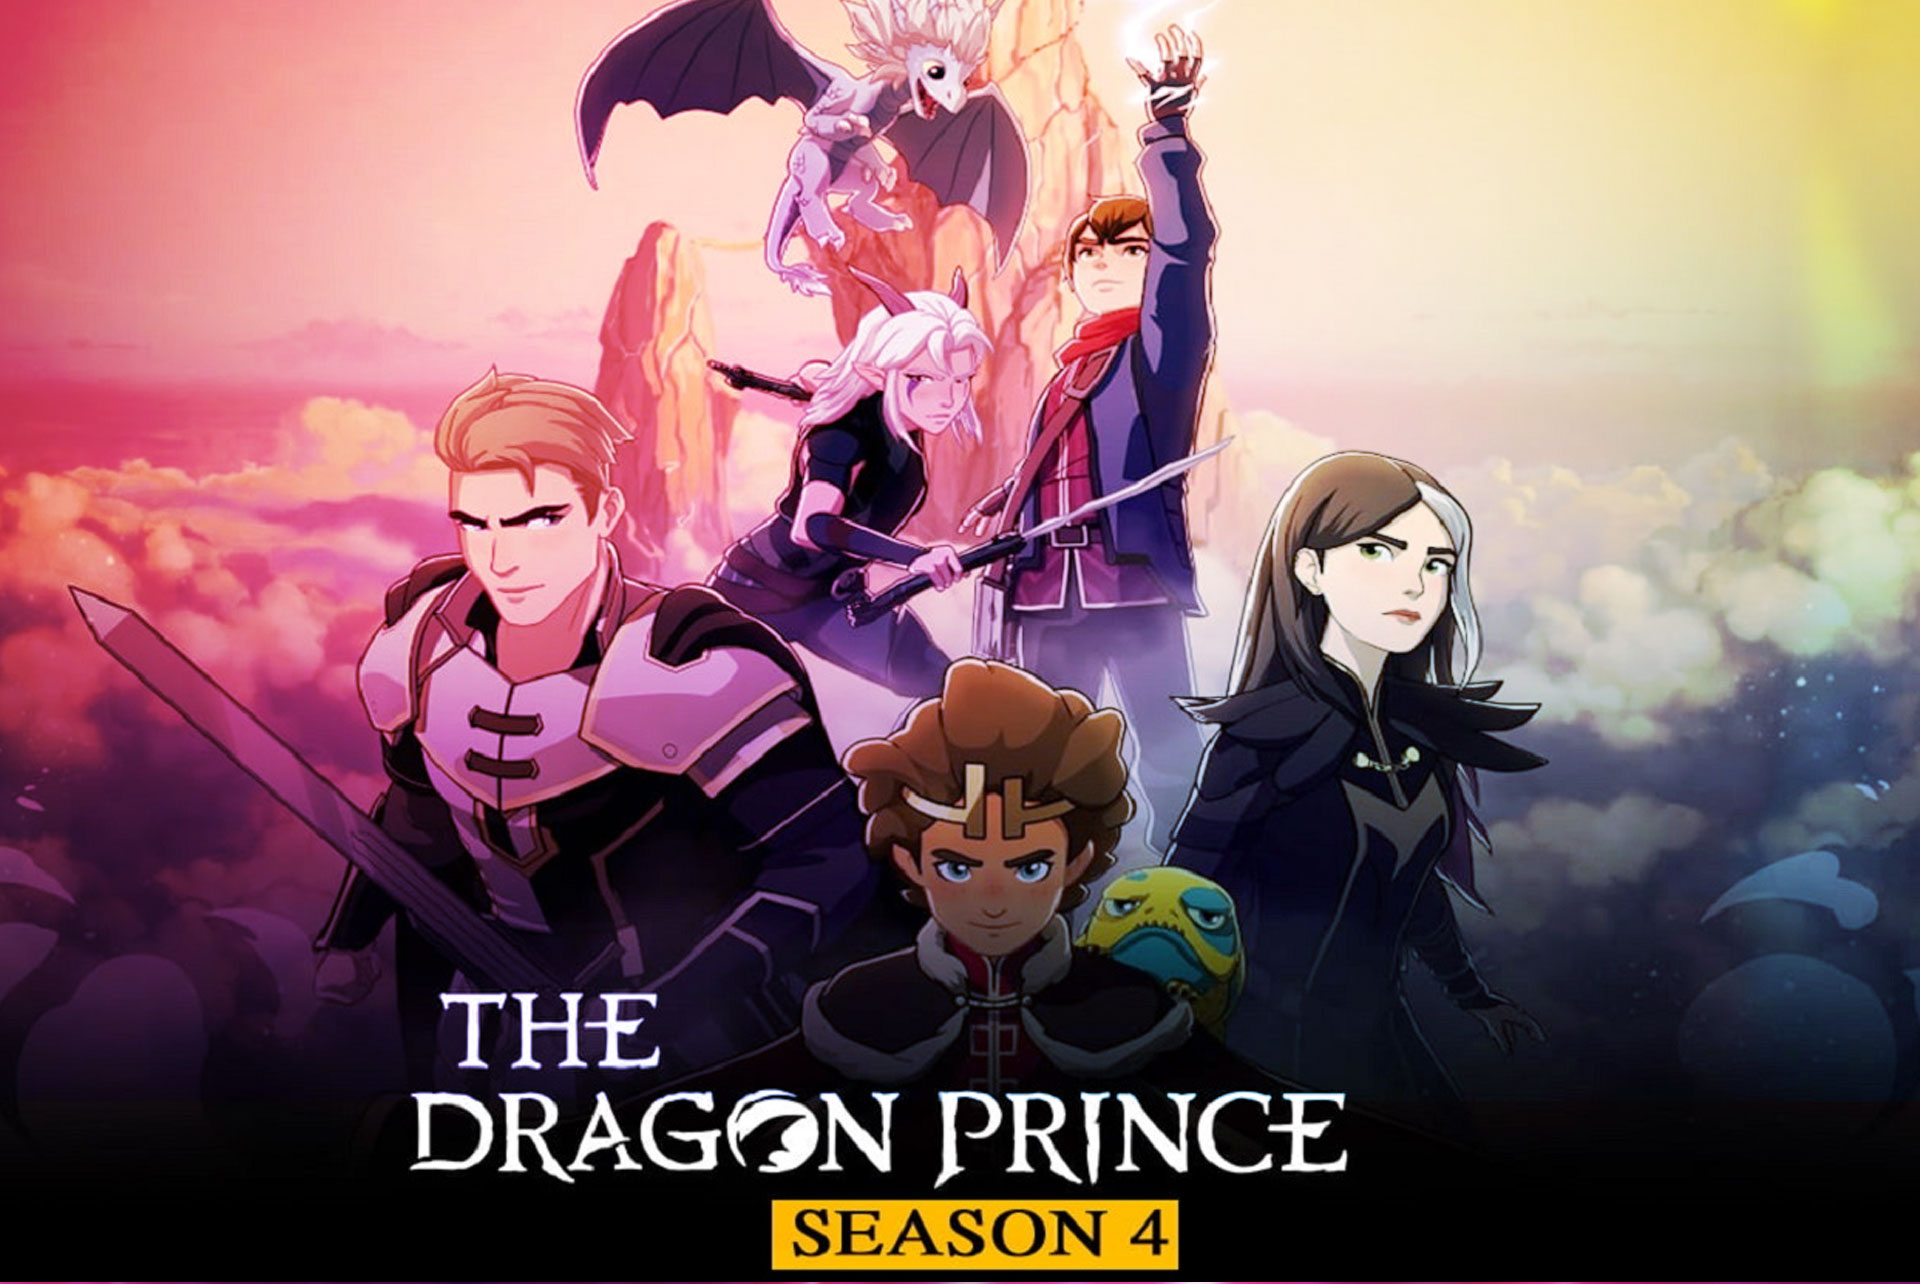 The Dragon Prince Season 4 details